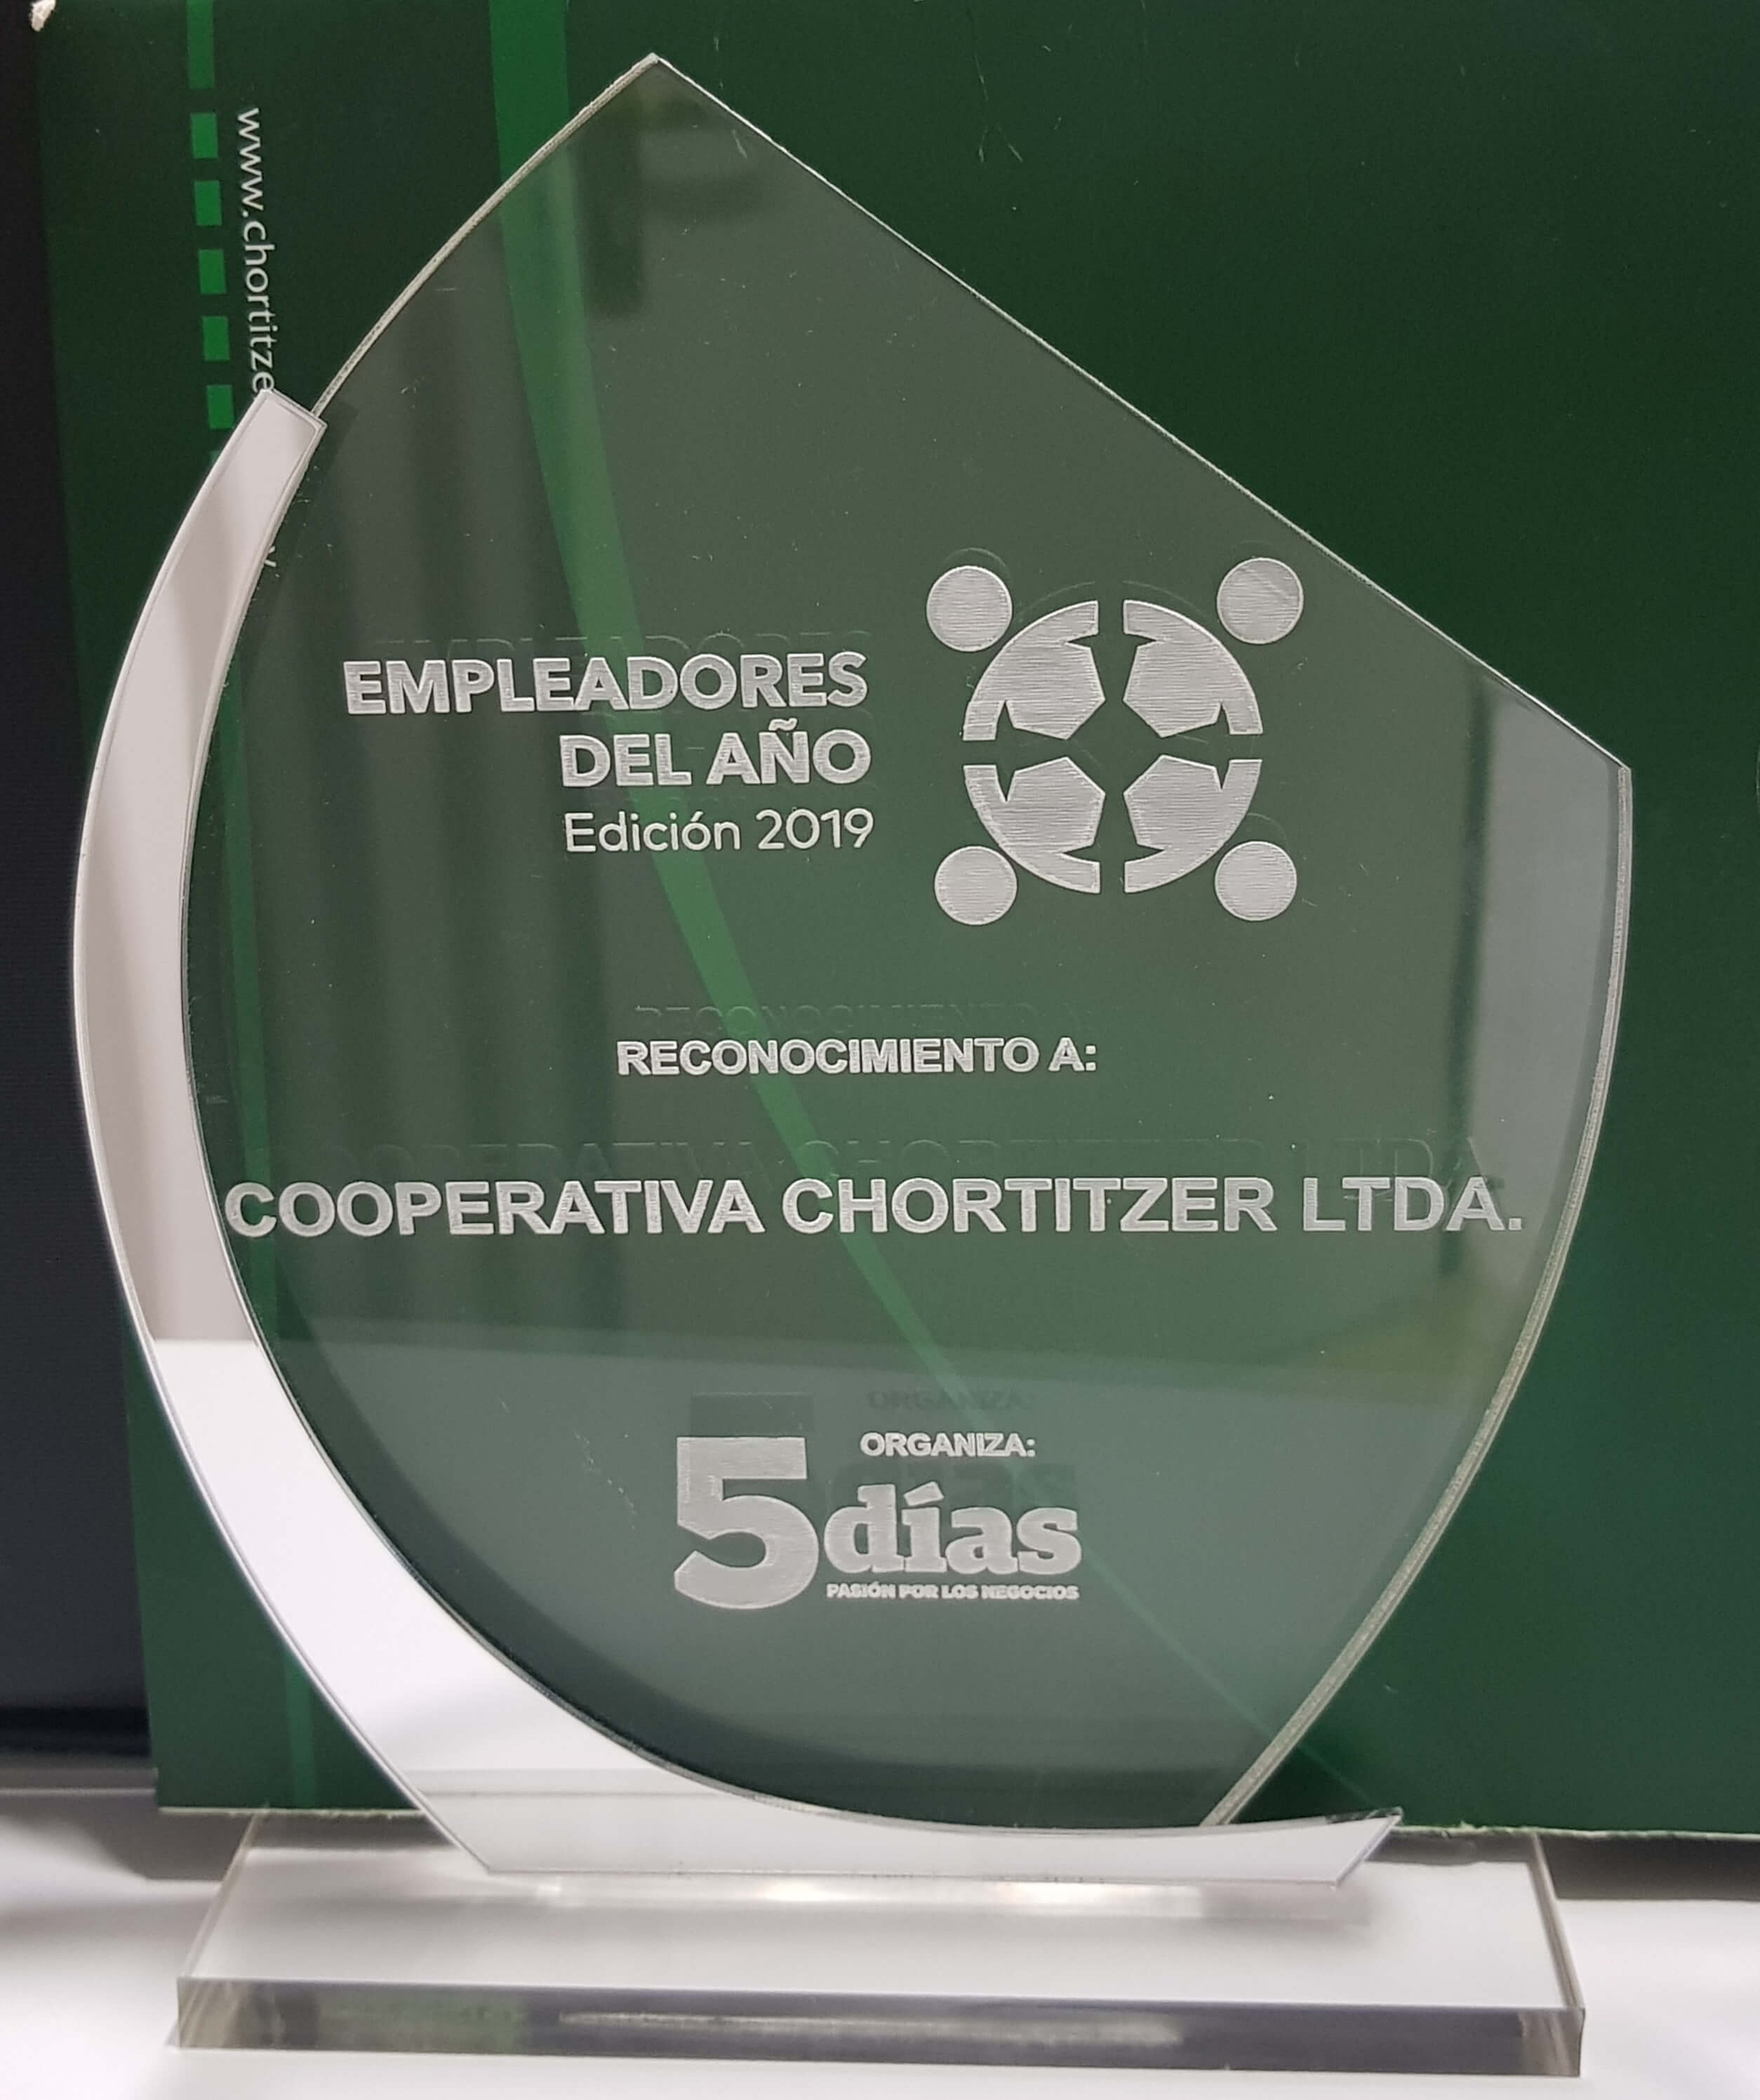 Cooperativa Chortitzer Ltda. – “Employer of the Year 2019”